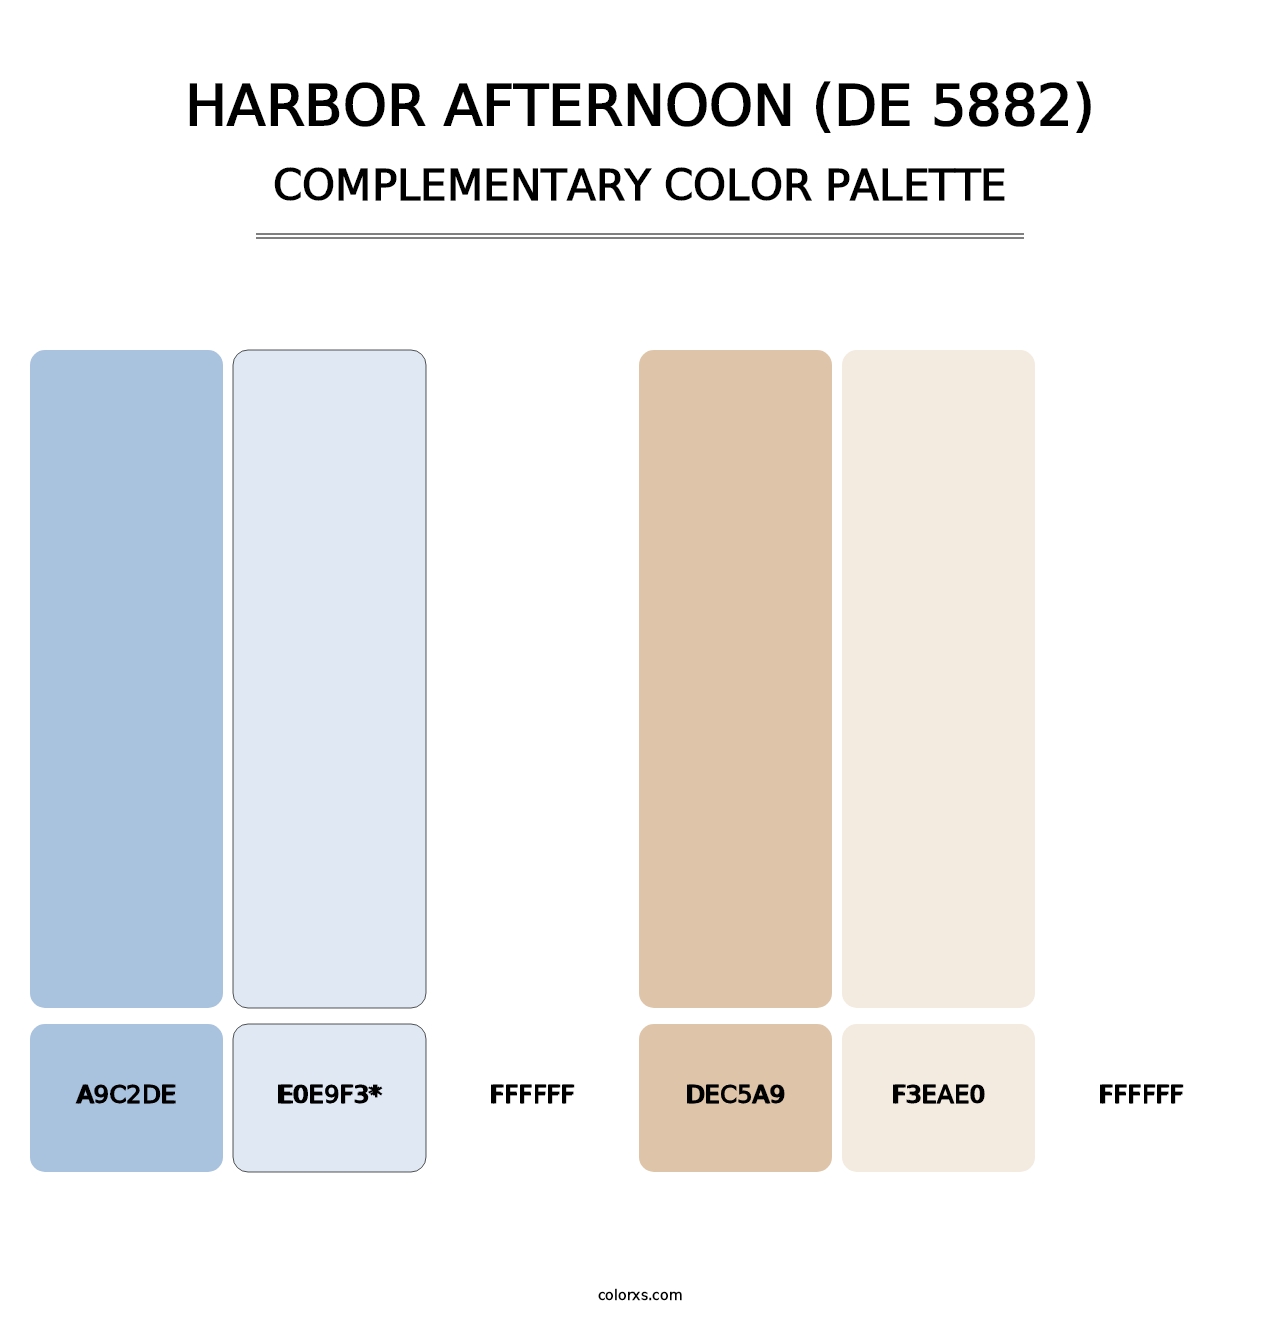 Harbor Afternoon (DE 5882) - Complementary Color Palette